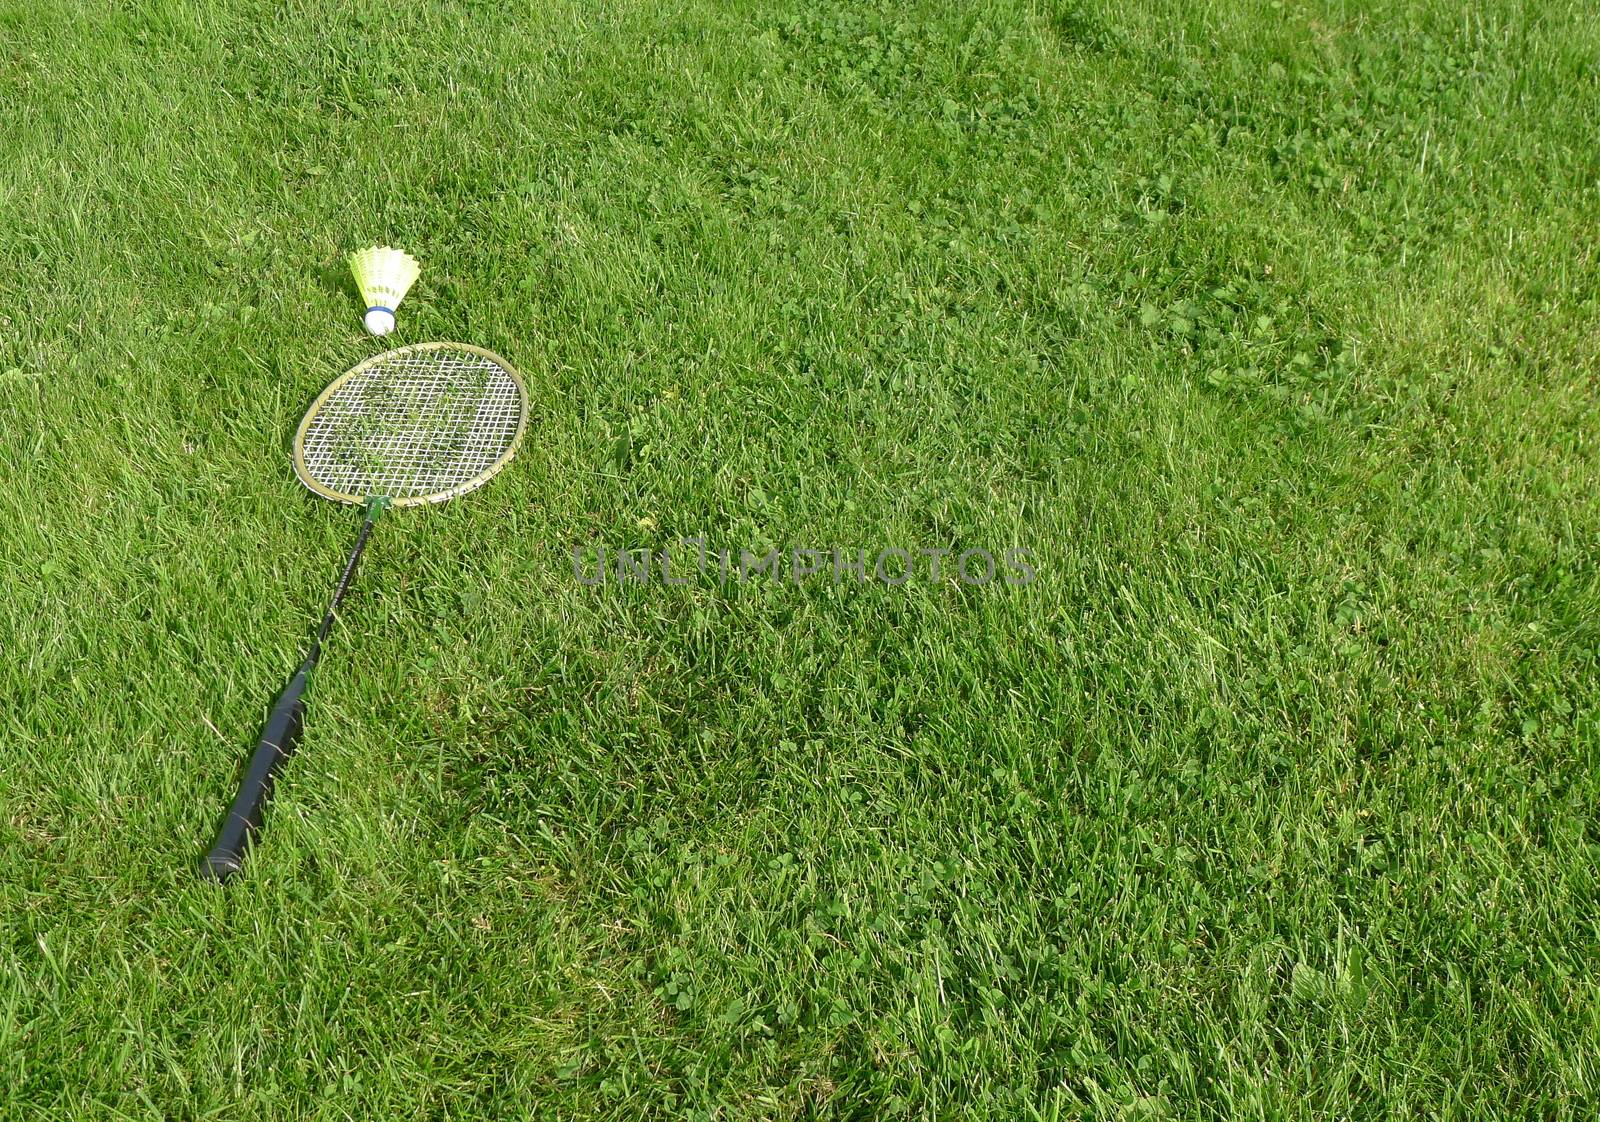 Badminton racket on grass